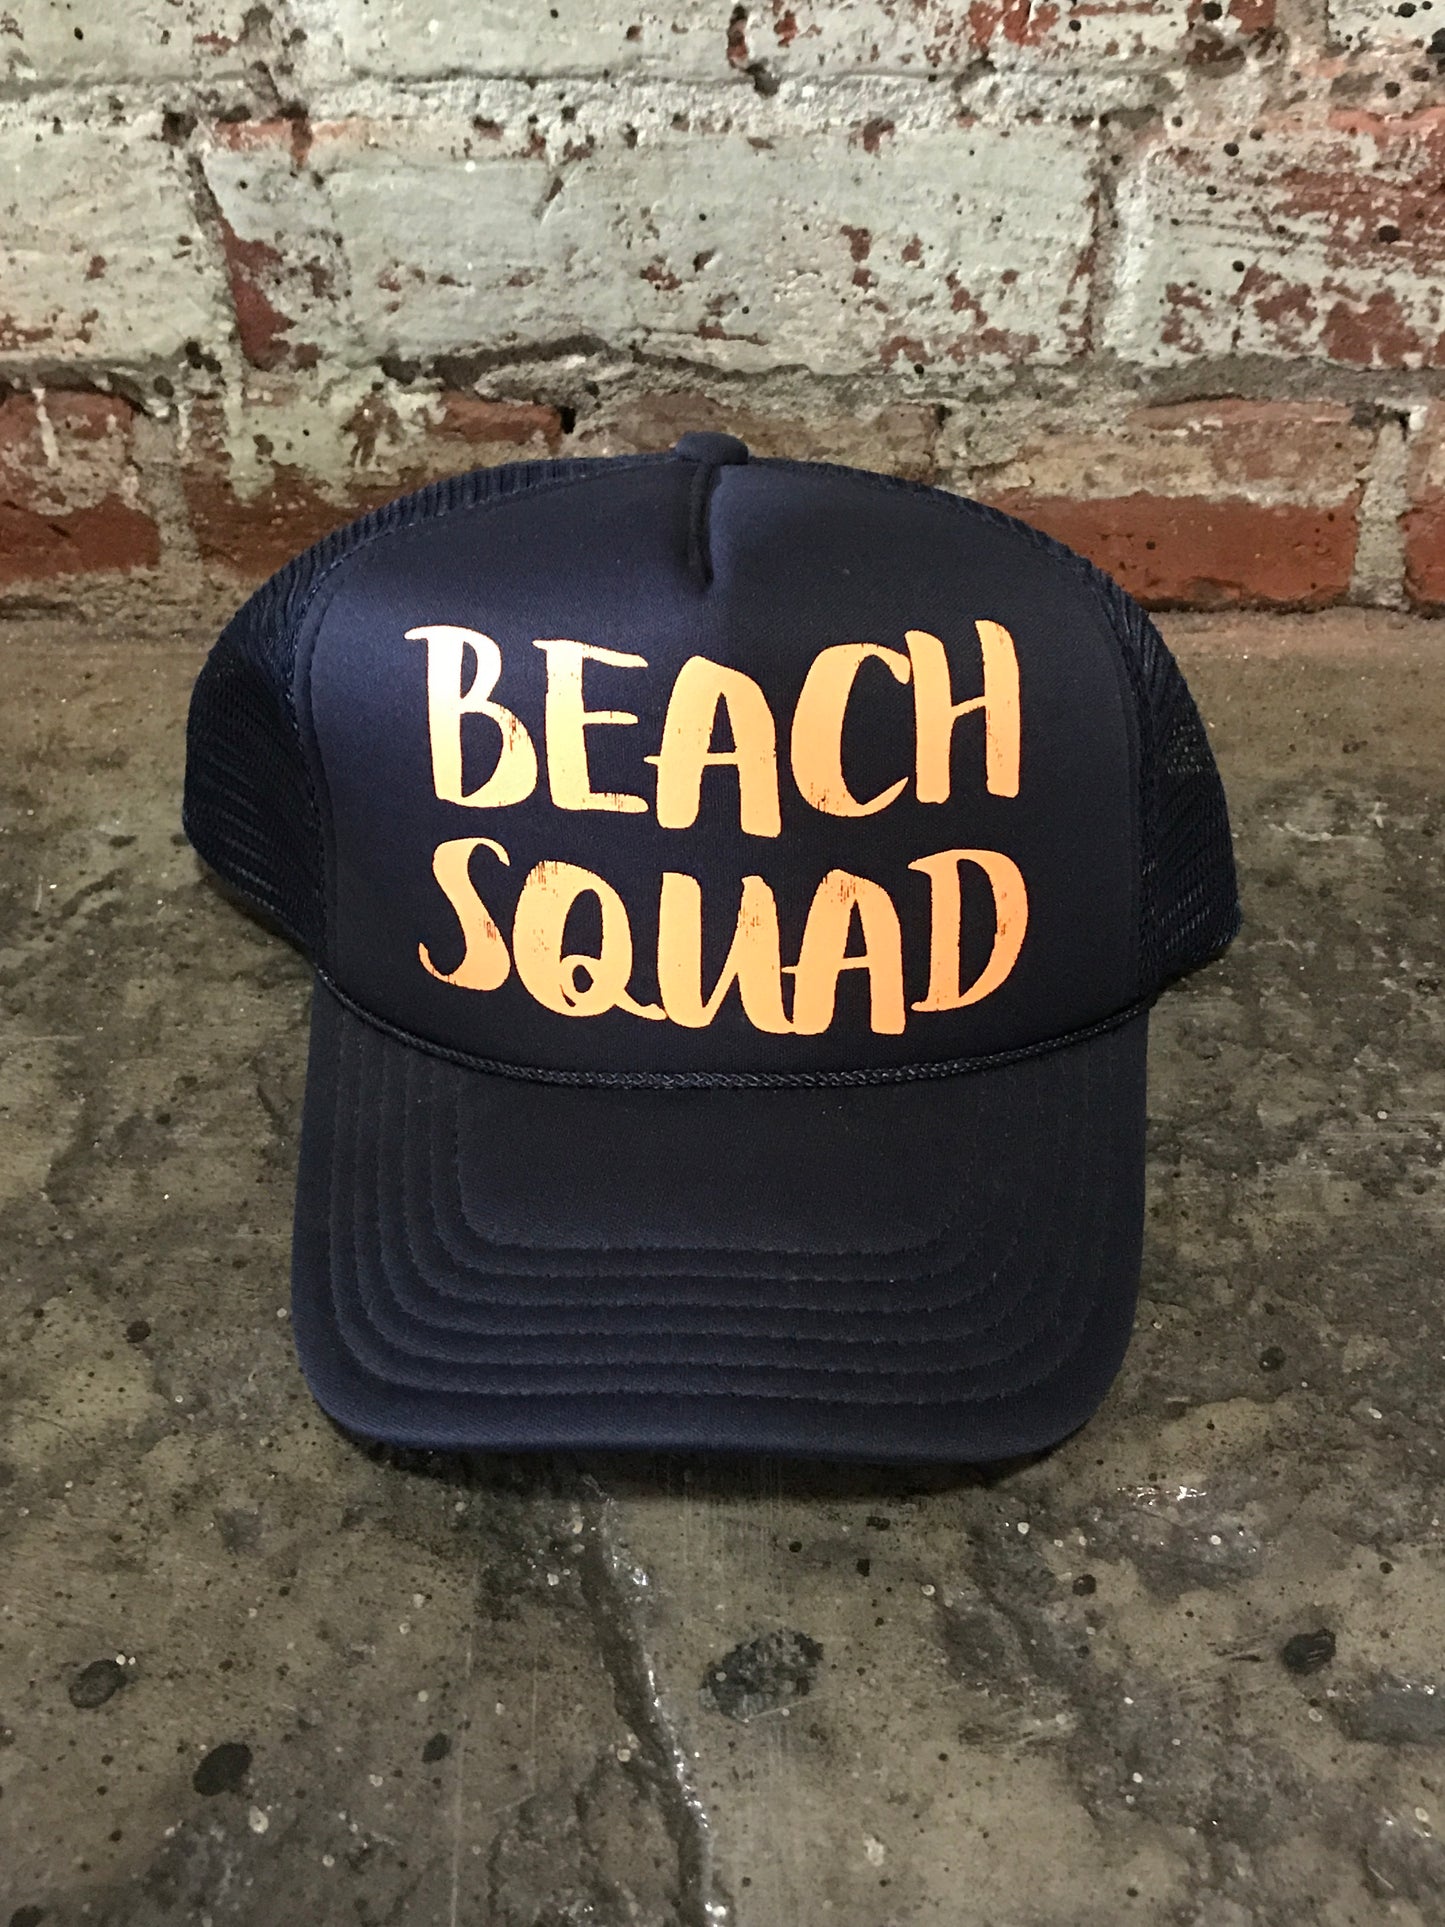 O'neill Beach Squad SnapBack